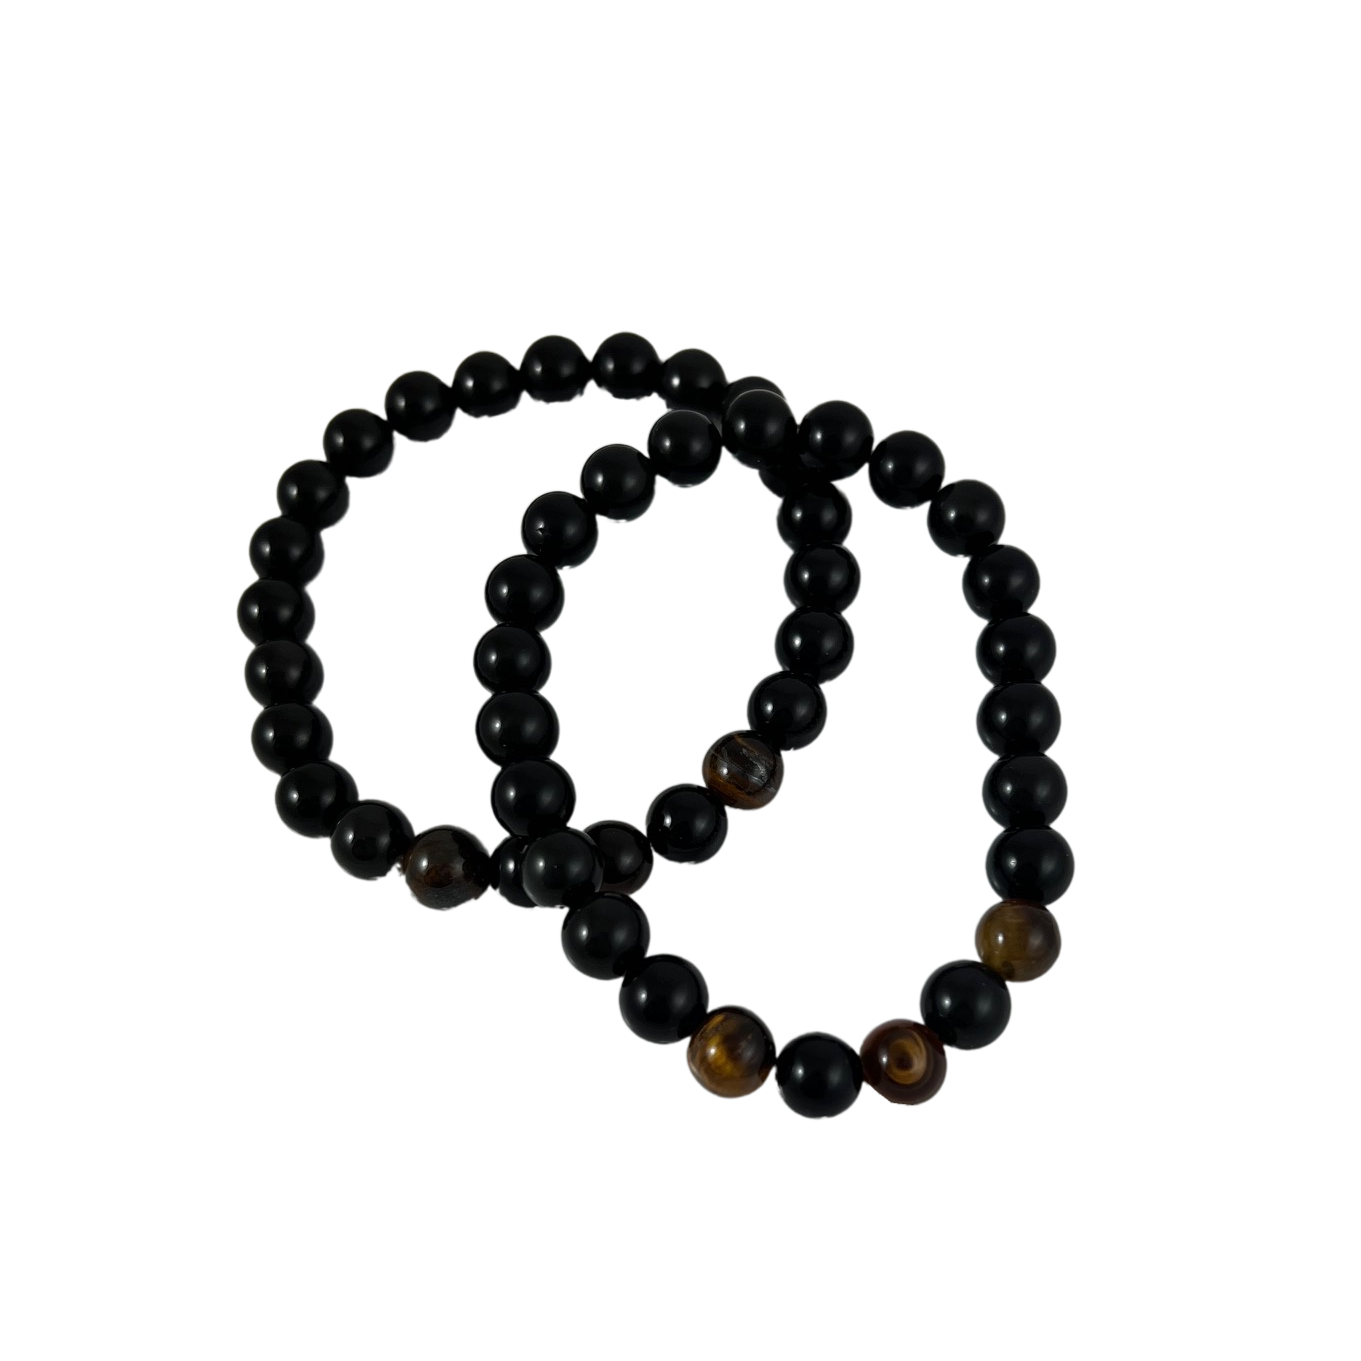 8mm obsidian bracelet with 3 tiger eye beads